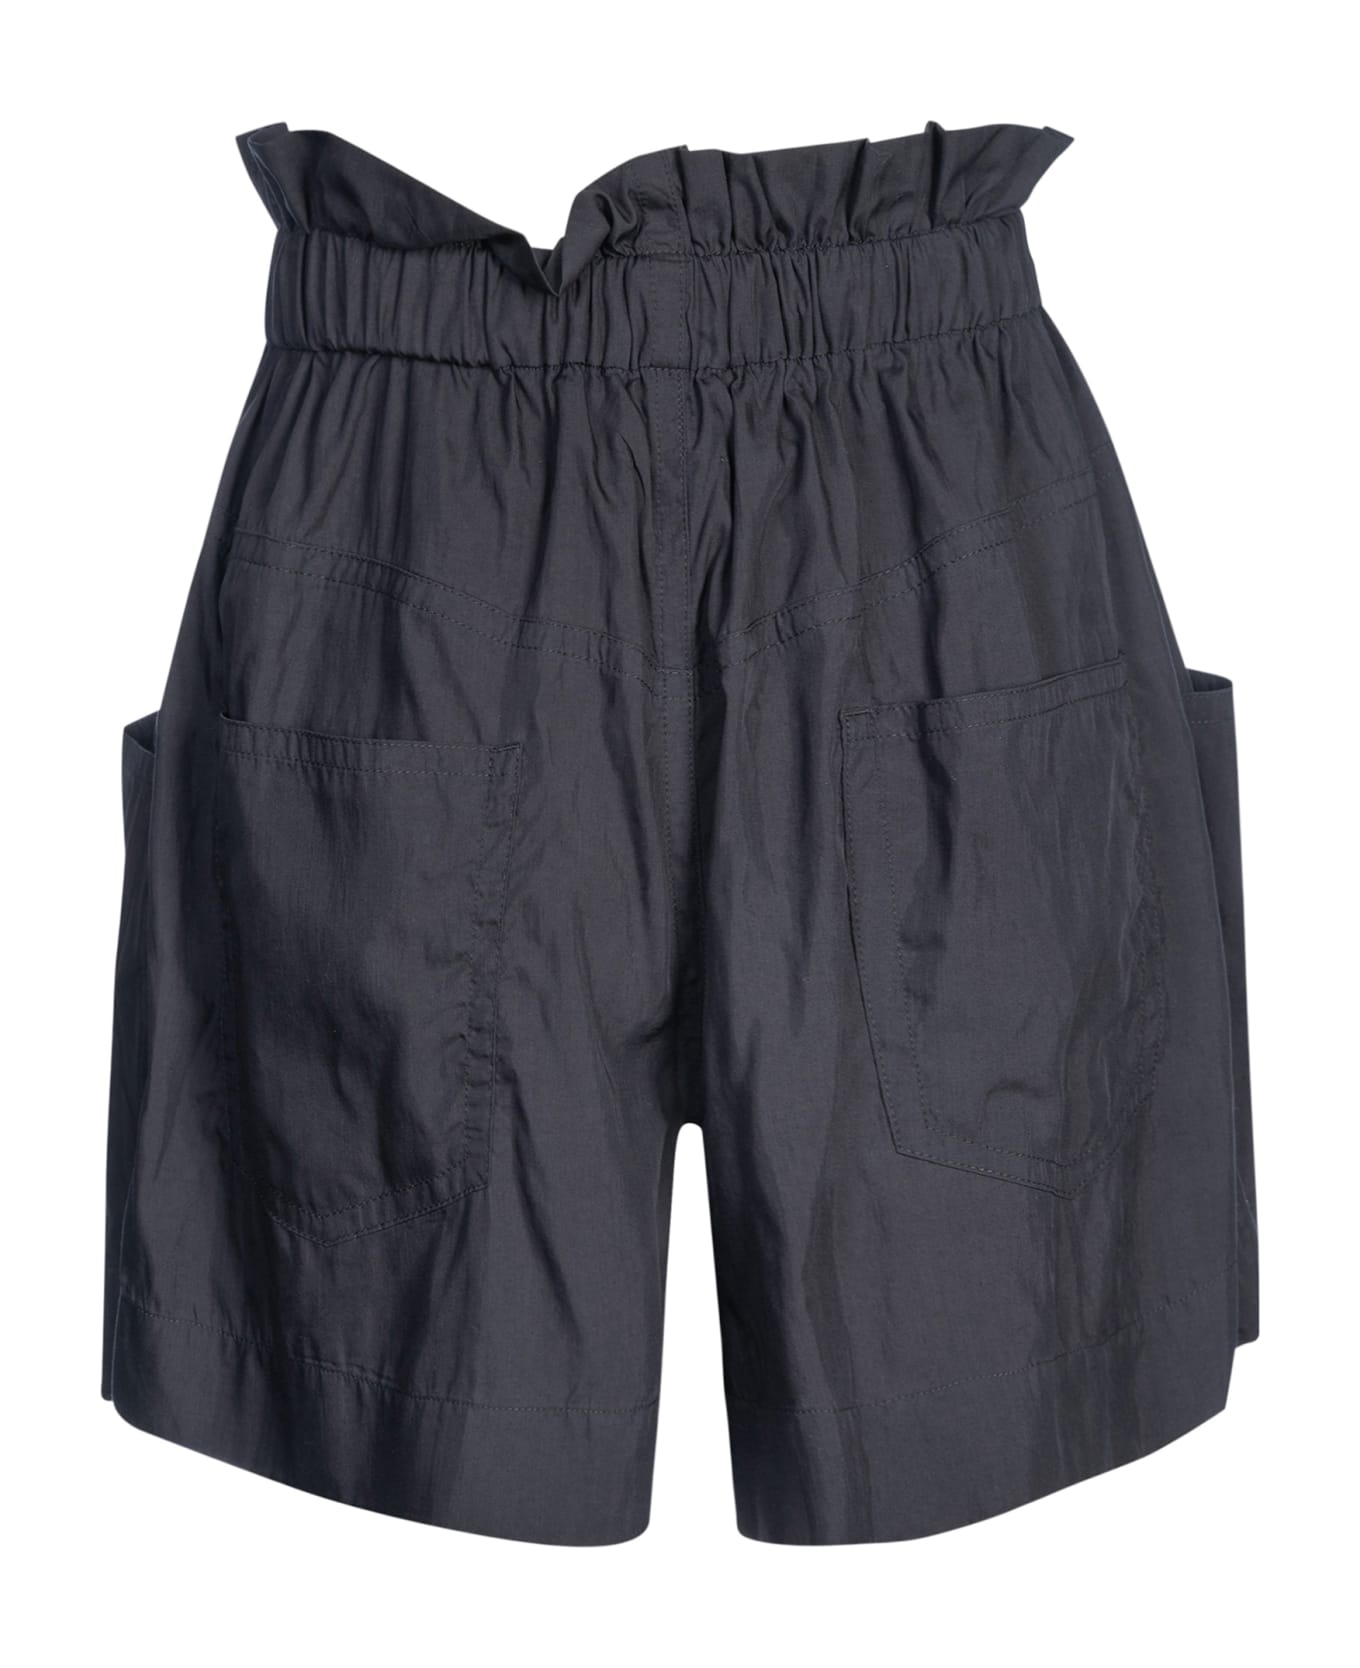 Isabel Marant Hidea Shorts - Faded Black